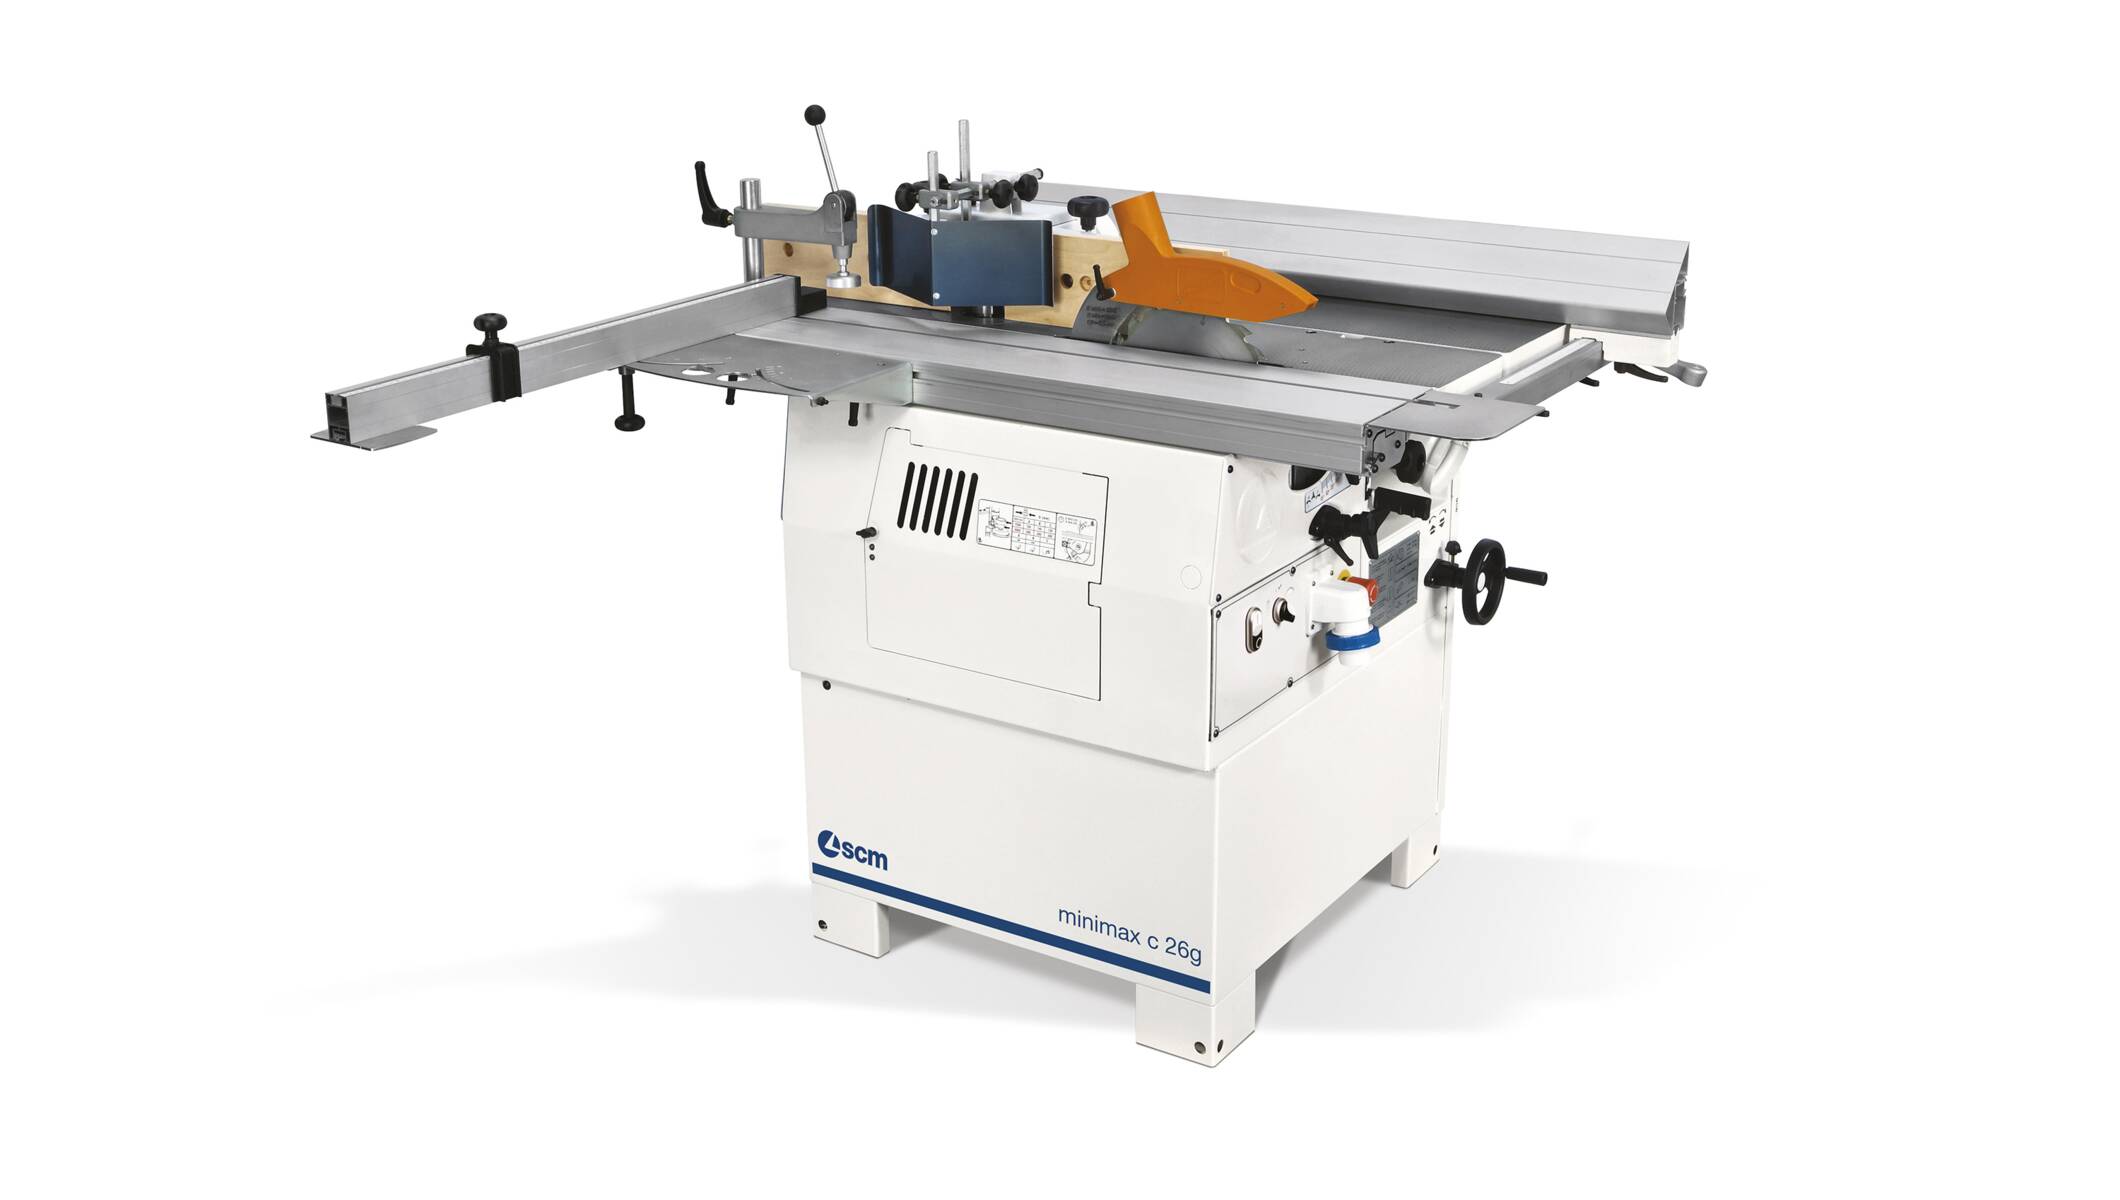 Tischlereimaschinen - Universal Kombimaschinen - minimax c 26g